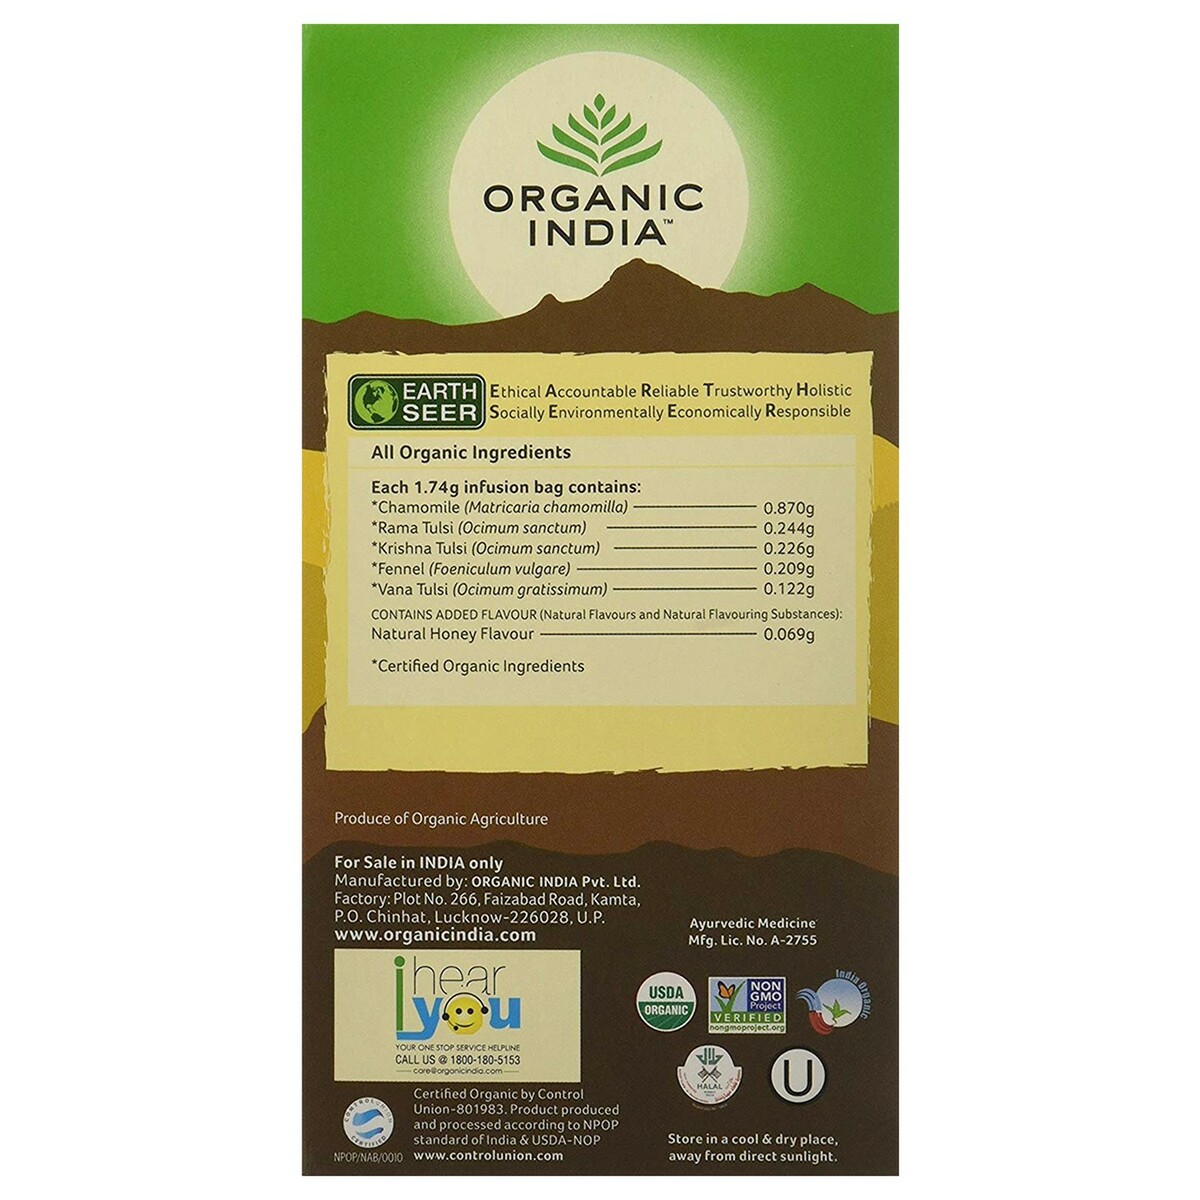 Organic India Tulsi Green Tea Honey Chamomile Bag 18's